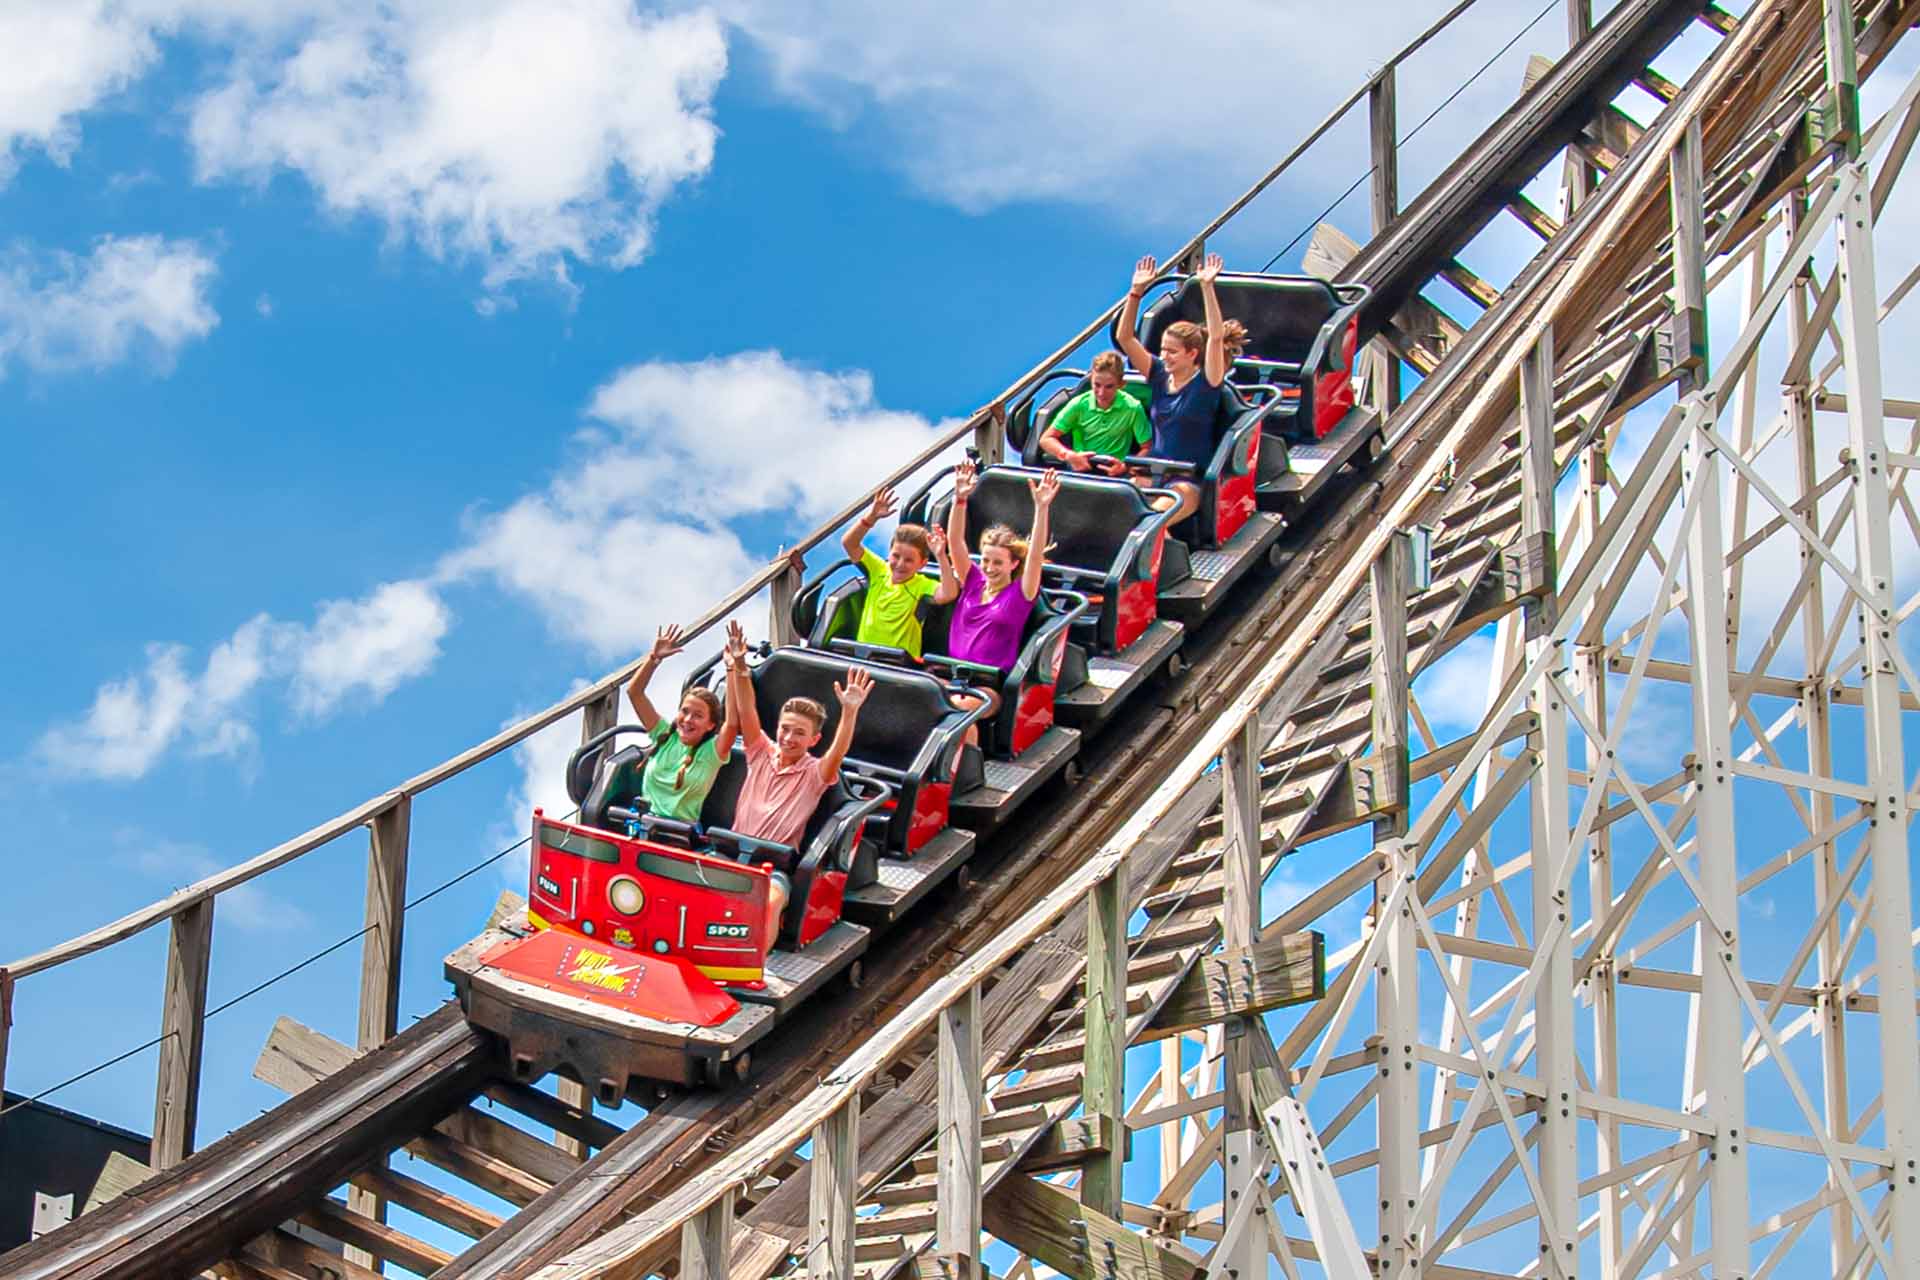 The Best Roller Coasters to Experience in Orlando - Spectrum Resort Orlando